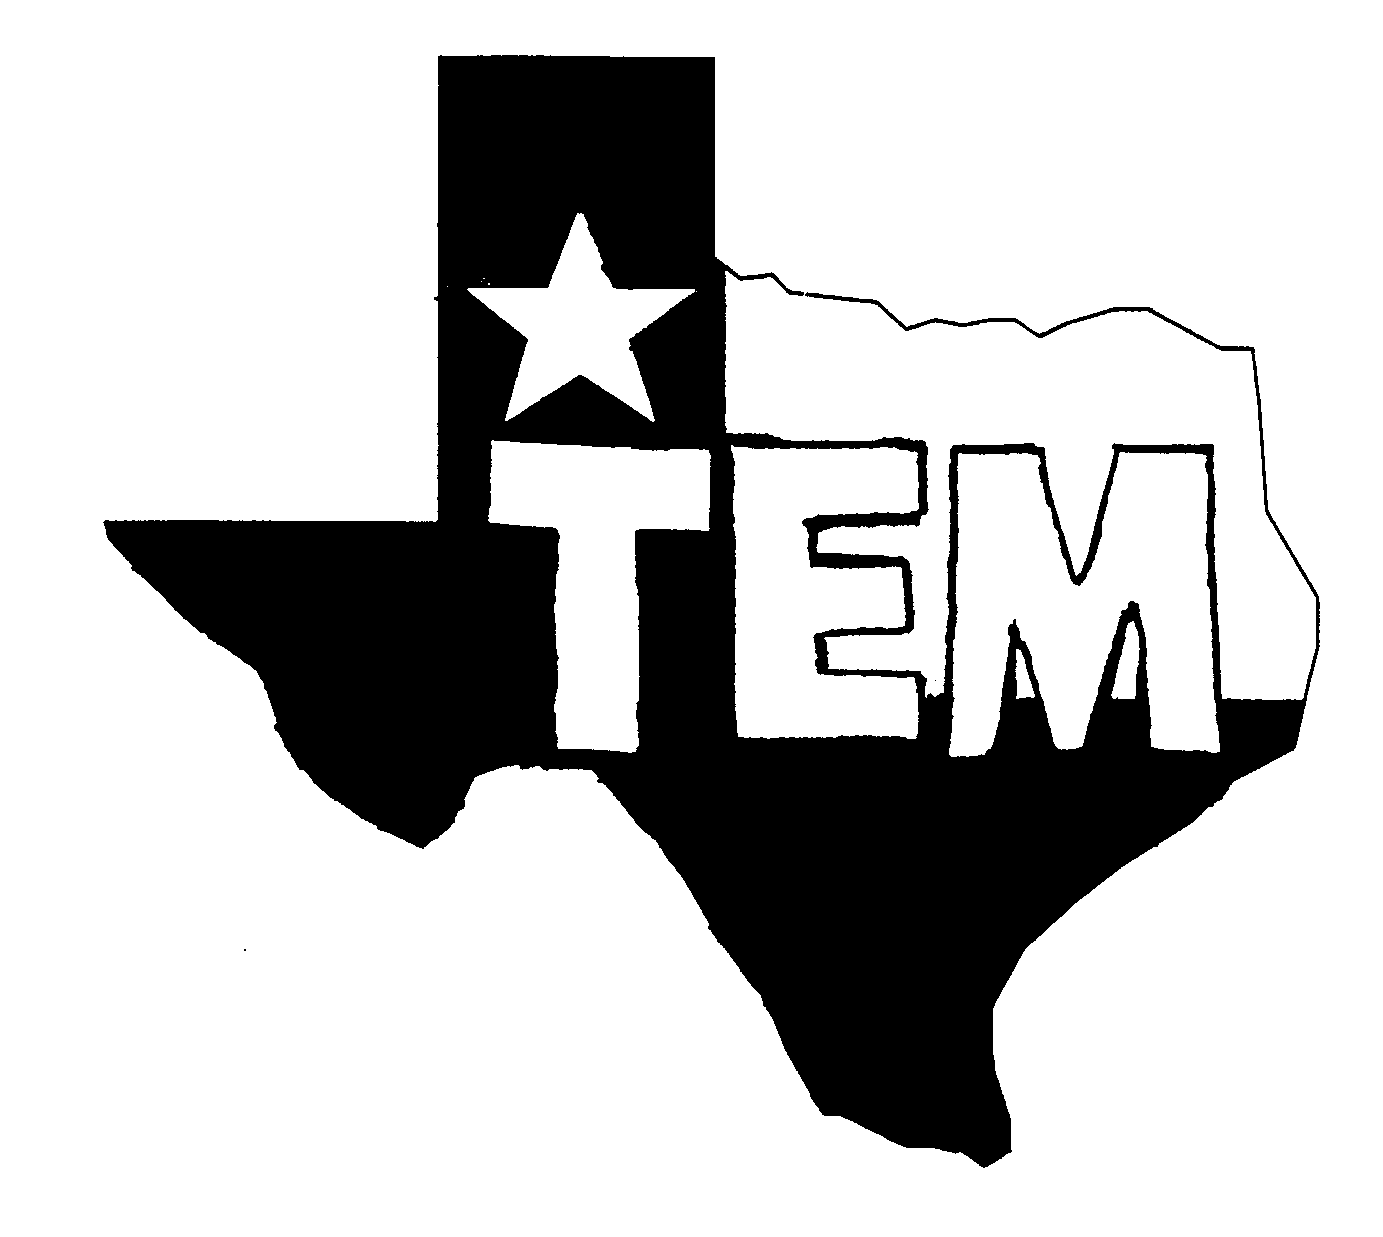 Trademark Logo TEM